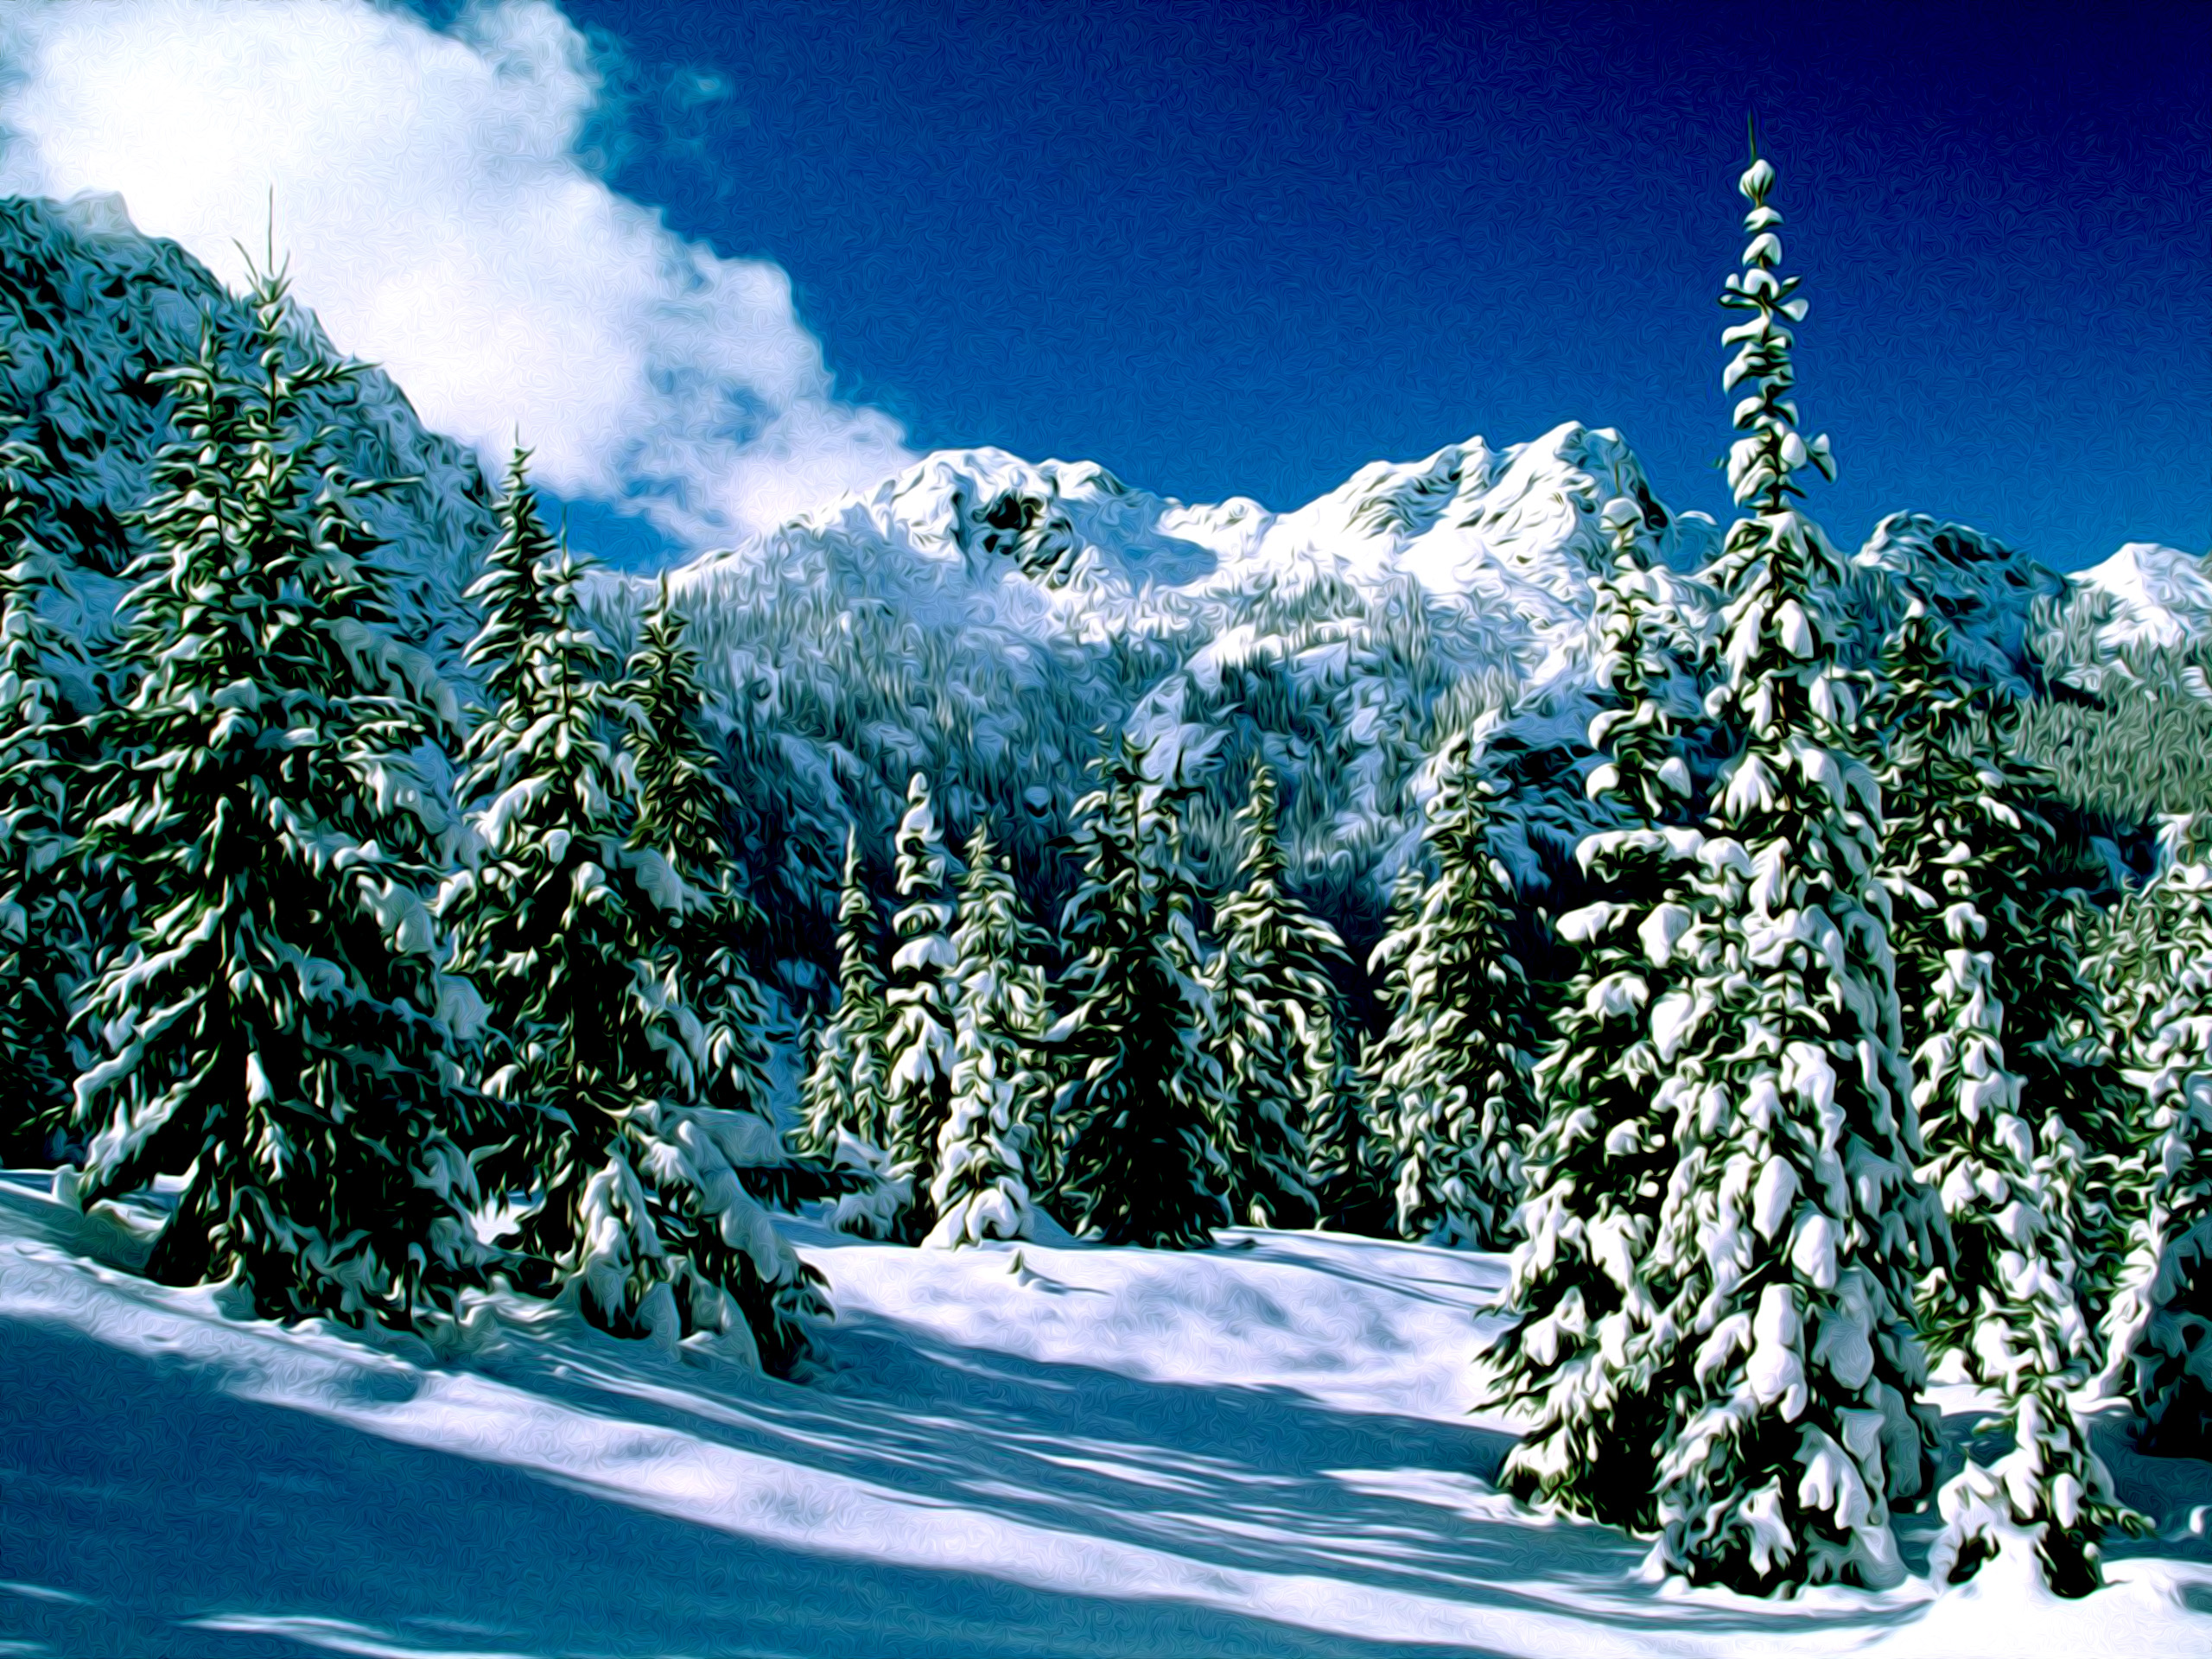 Winter Nature Snow Scene Free Desktop Wallpapers for